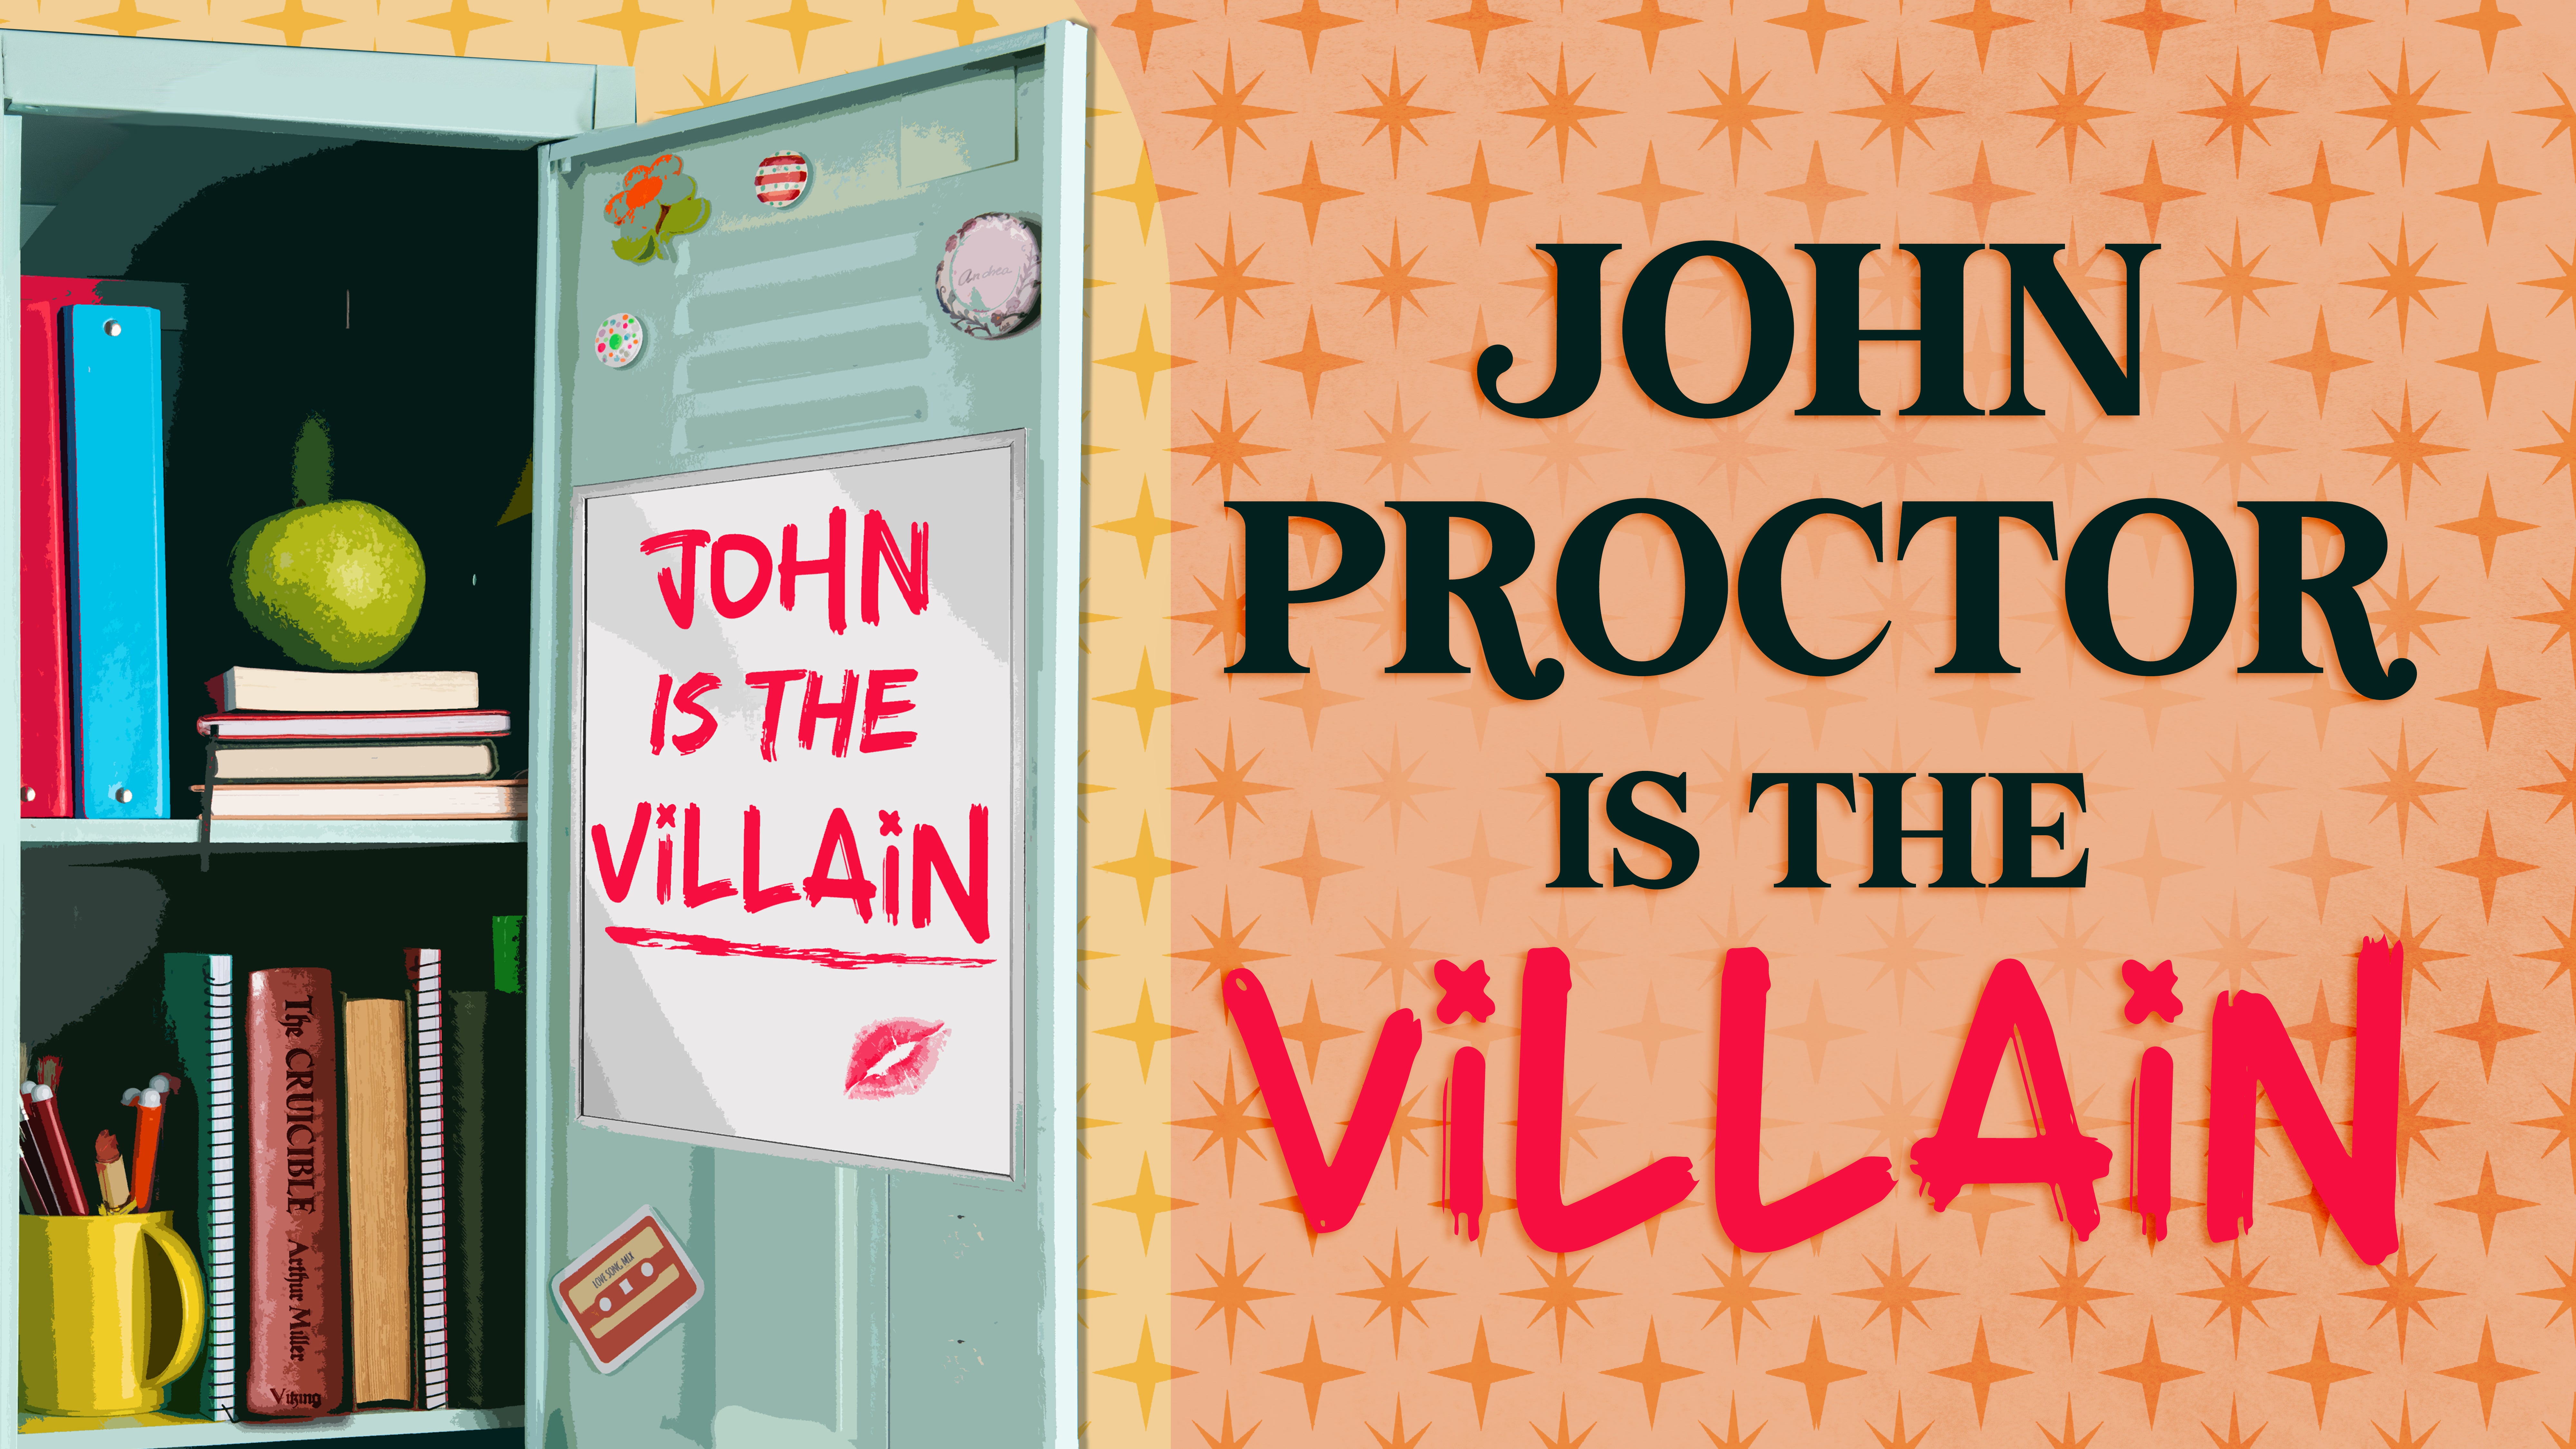 John is the villain copy 2.jpg